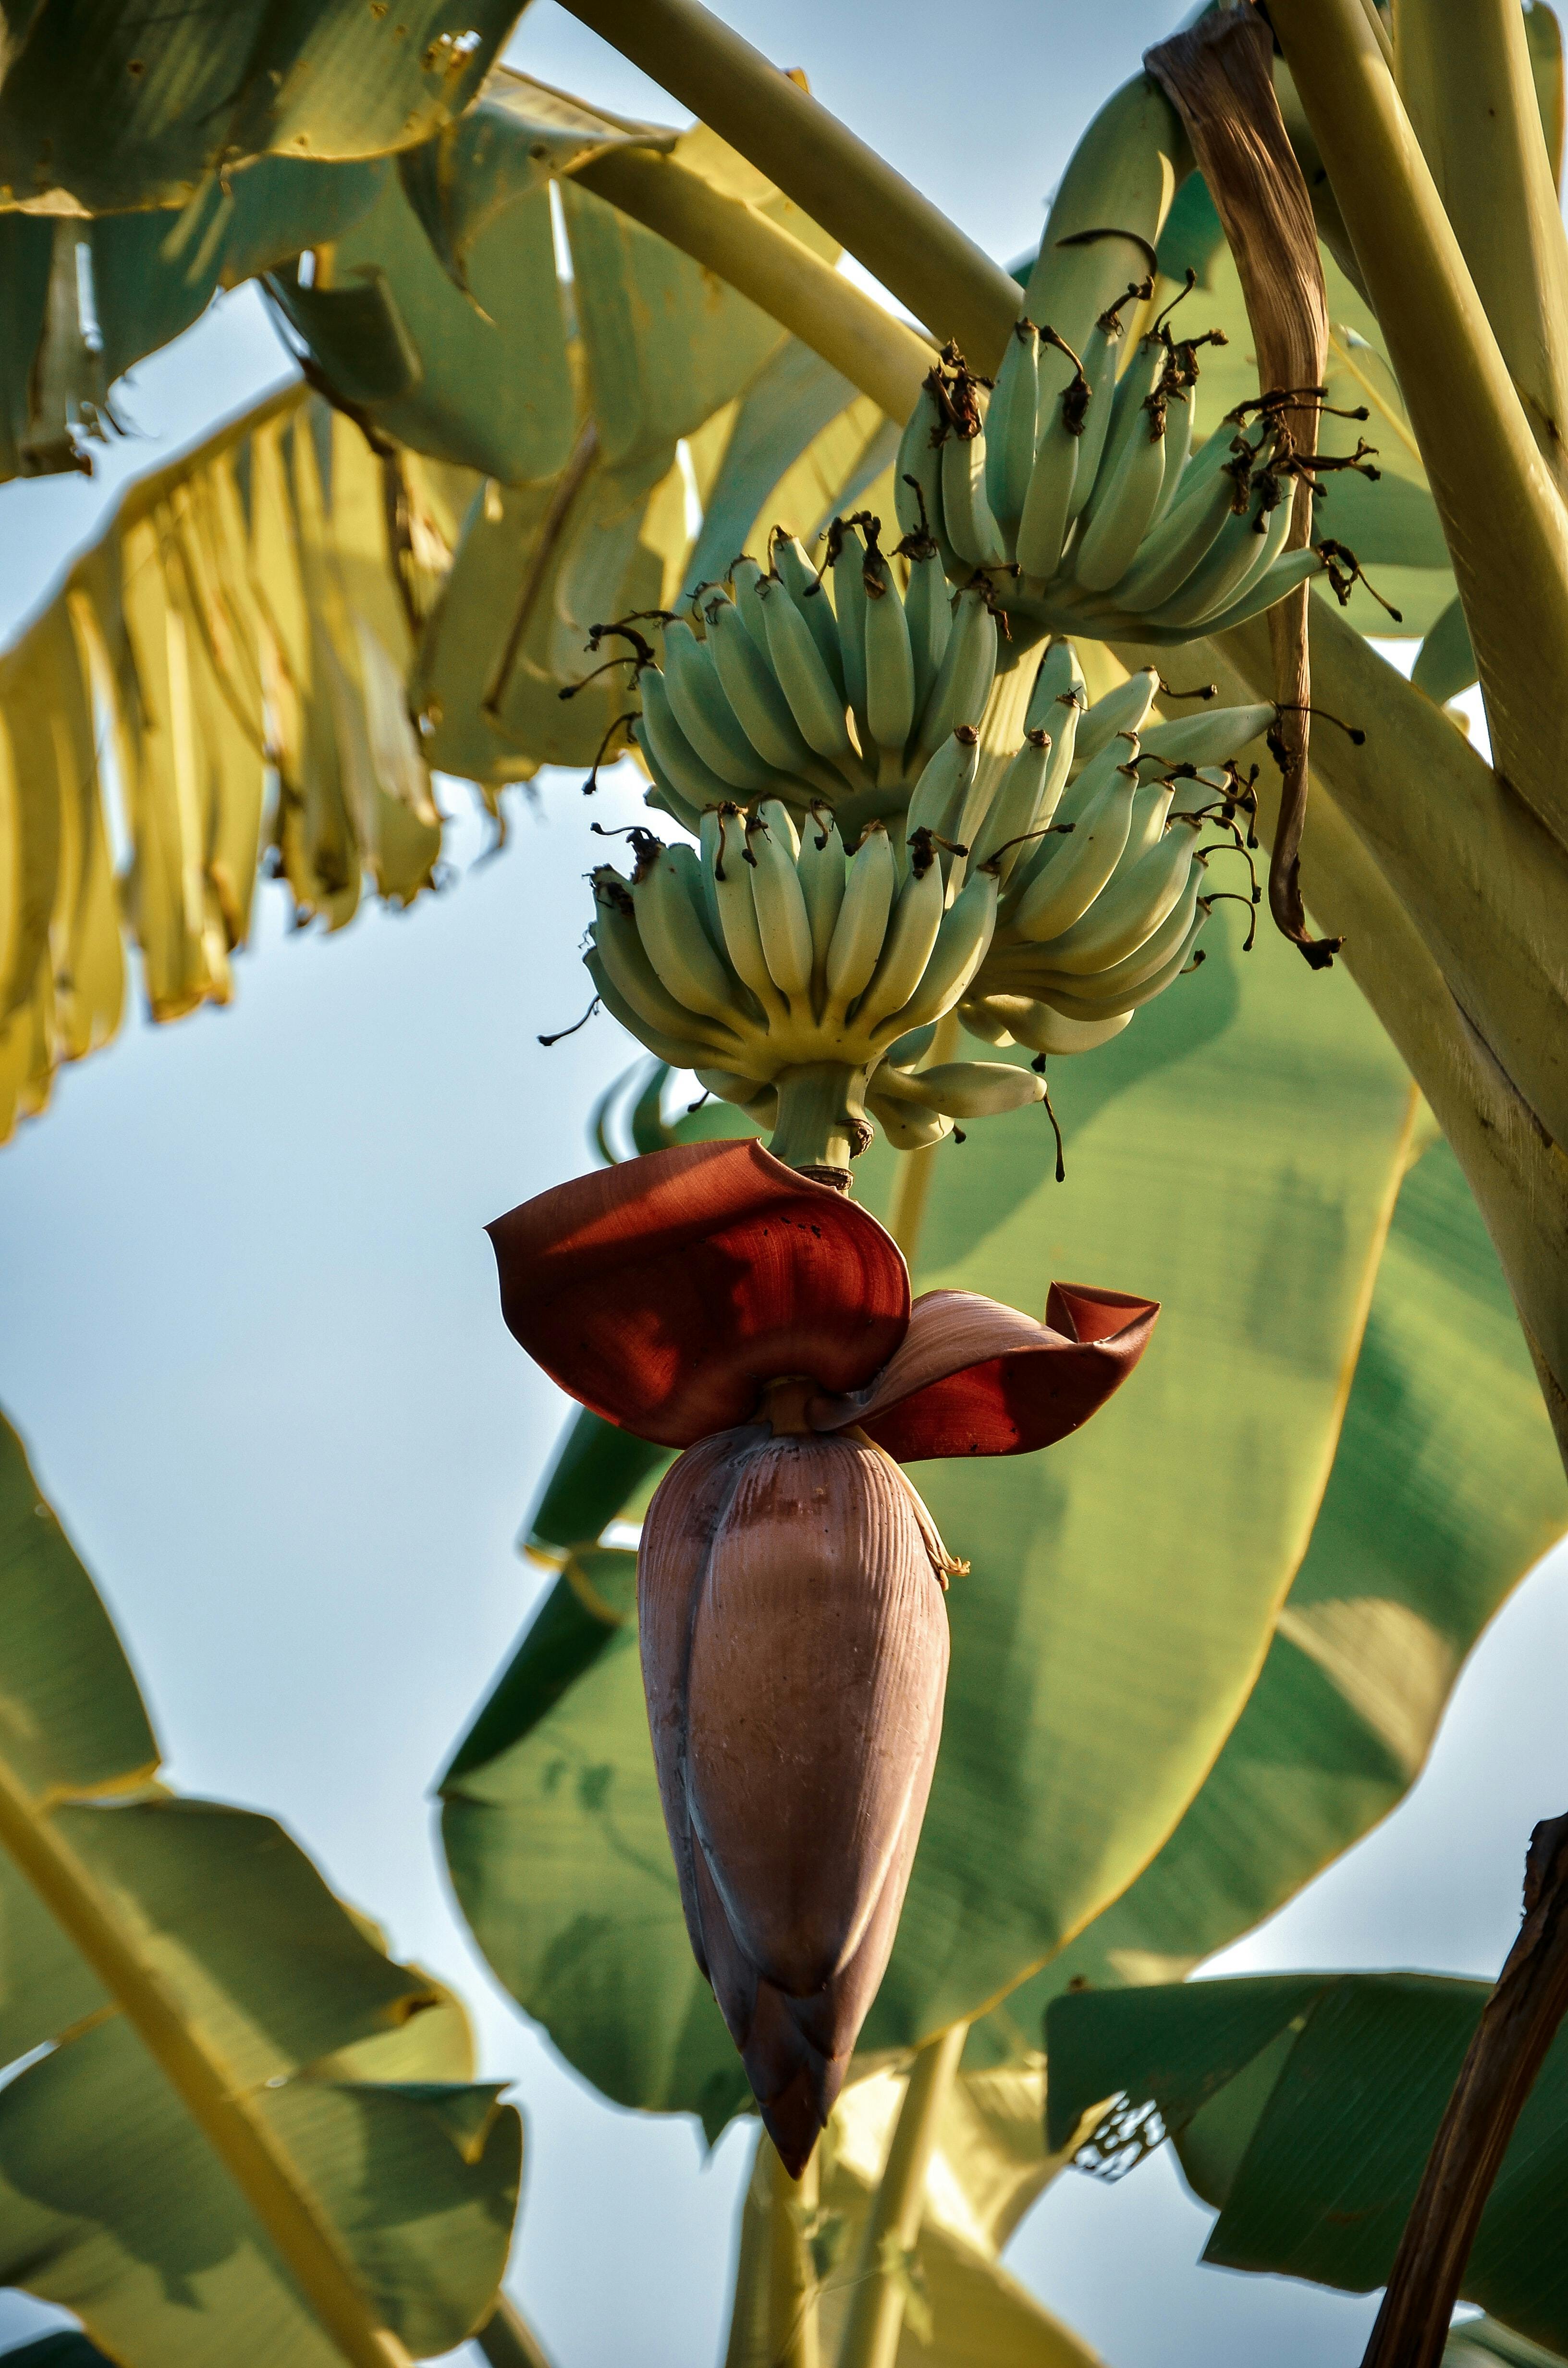 Banana tree with bananas and a flower